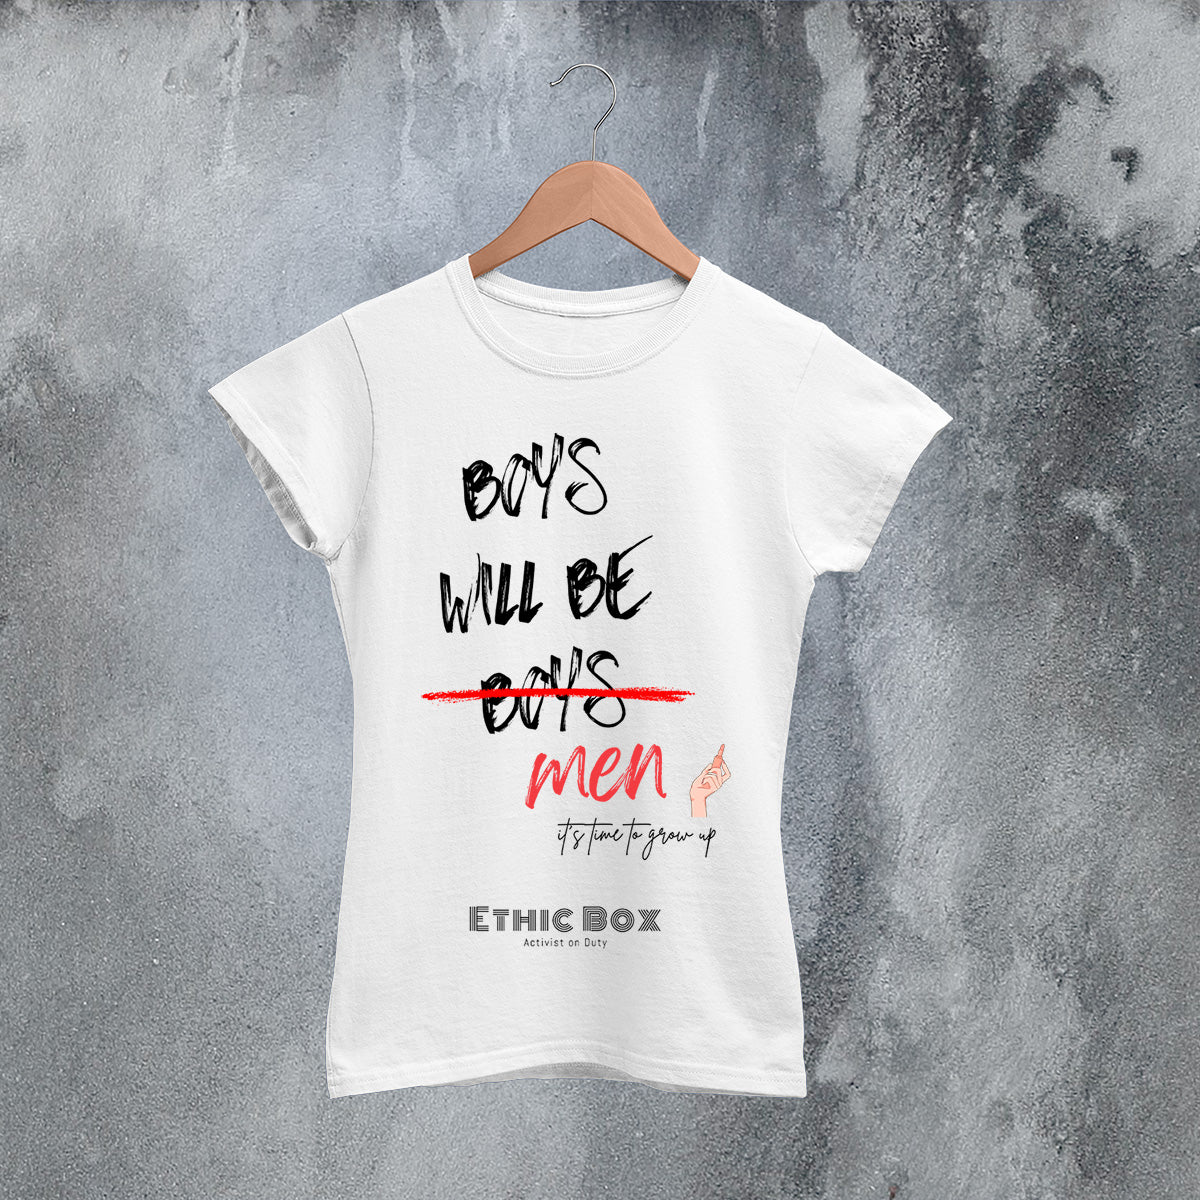 Boys will be boys - Women Fit